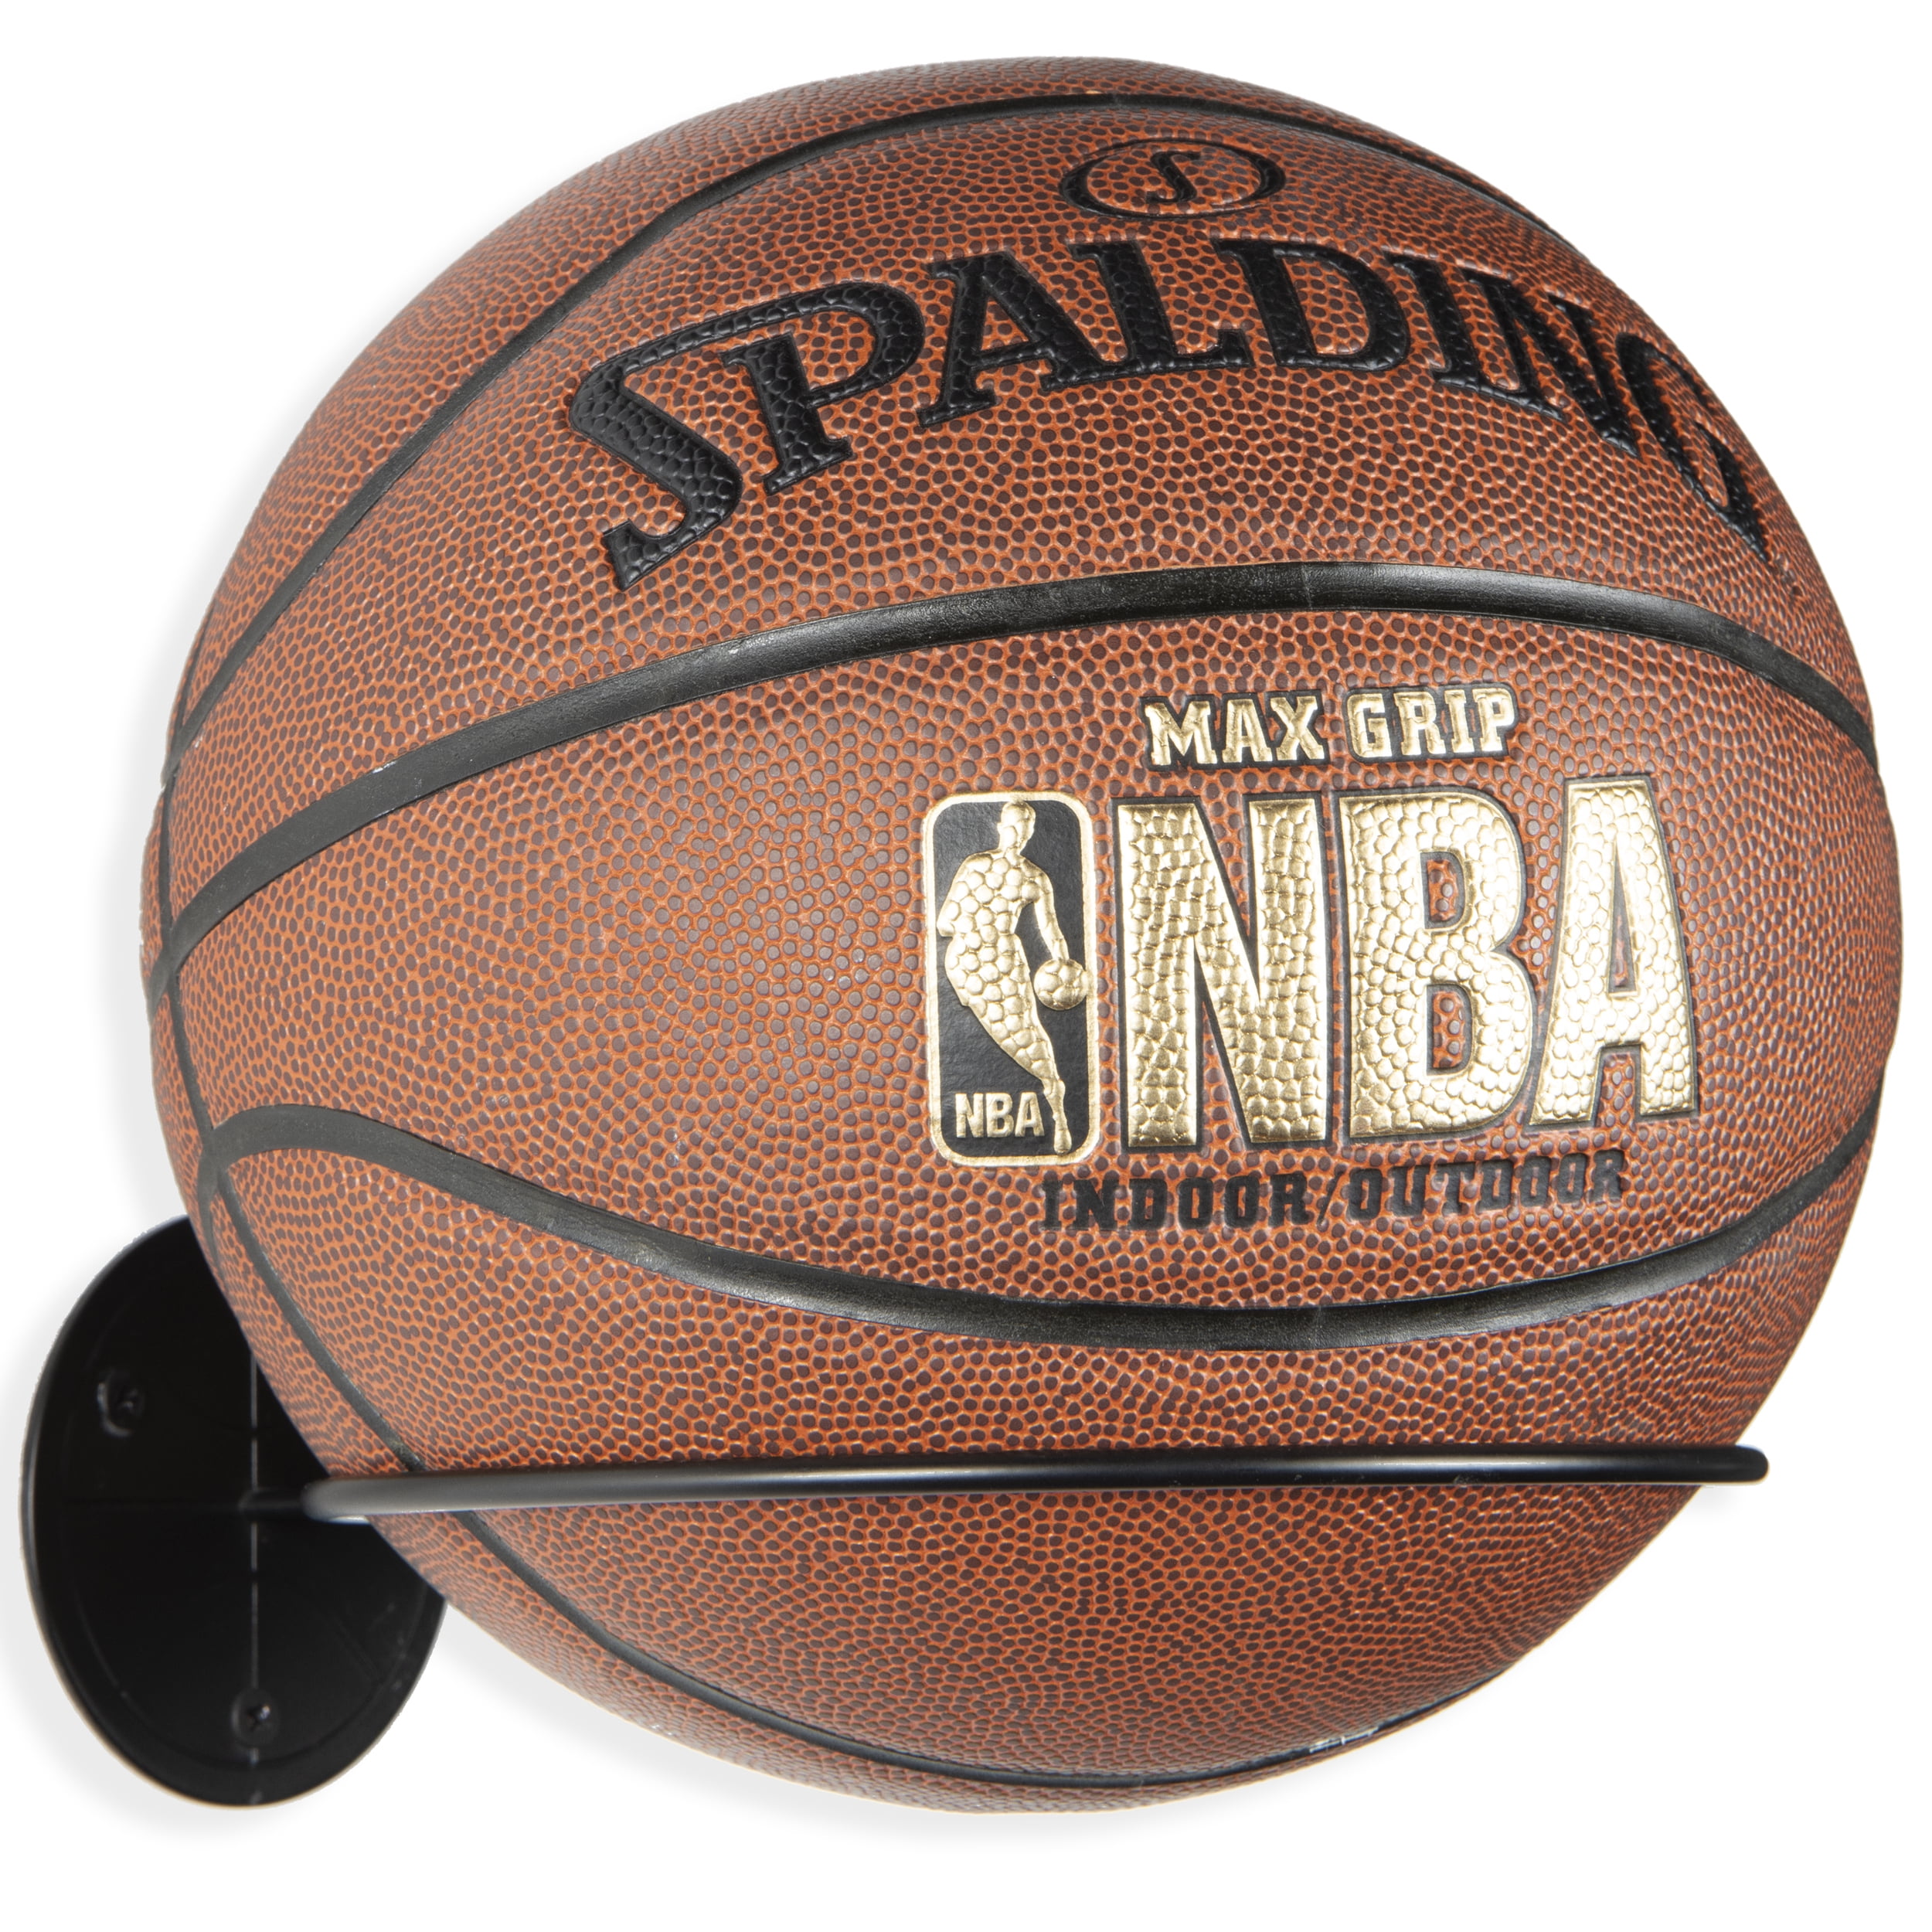 Fdit Ball Storage Rack Basketball Butler Basketball Football Holder Drying Rack home use